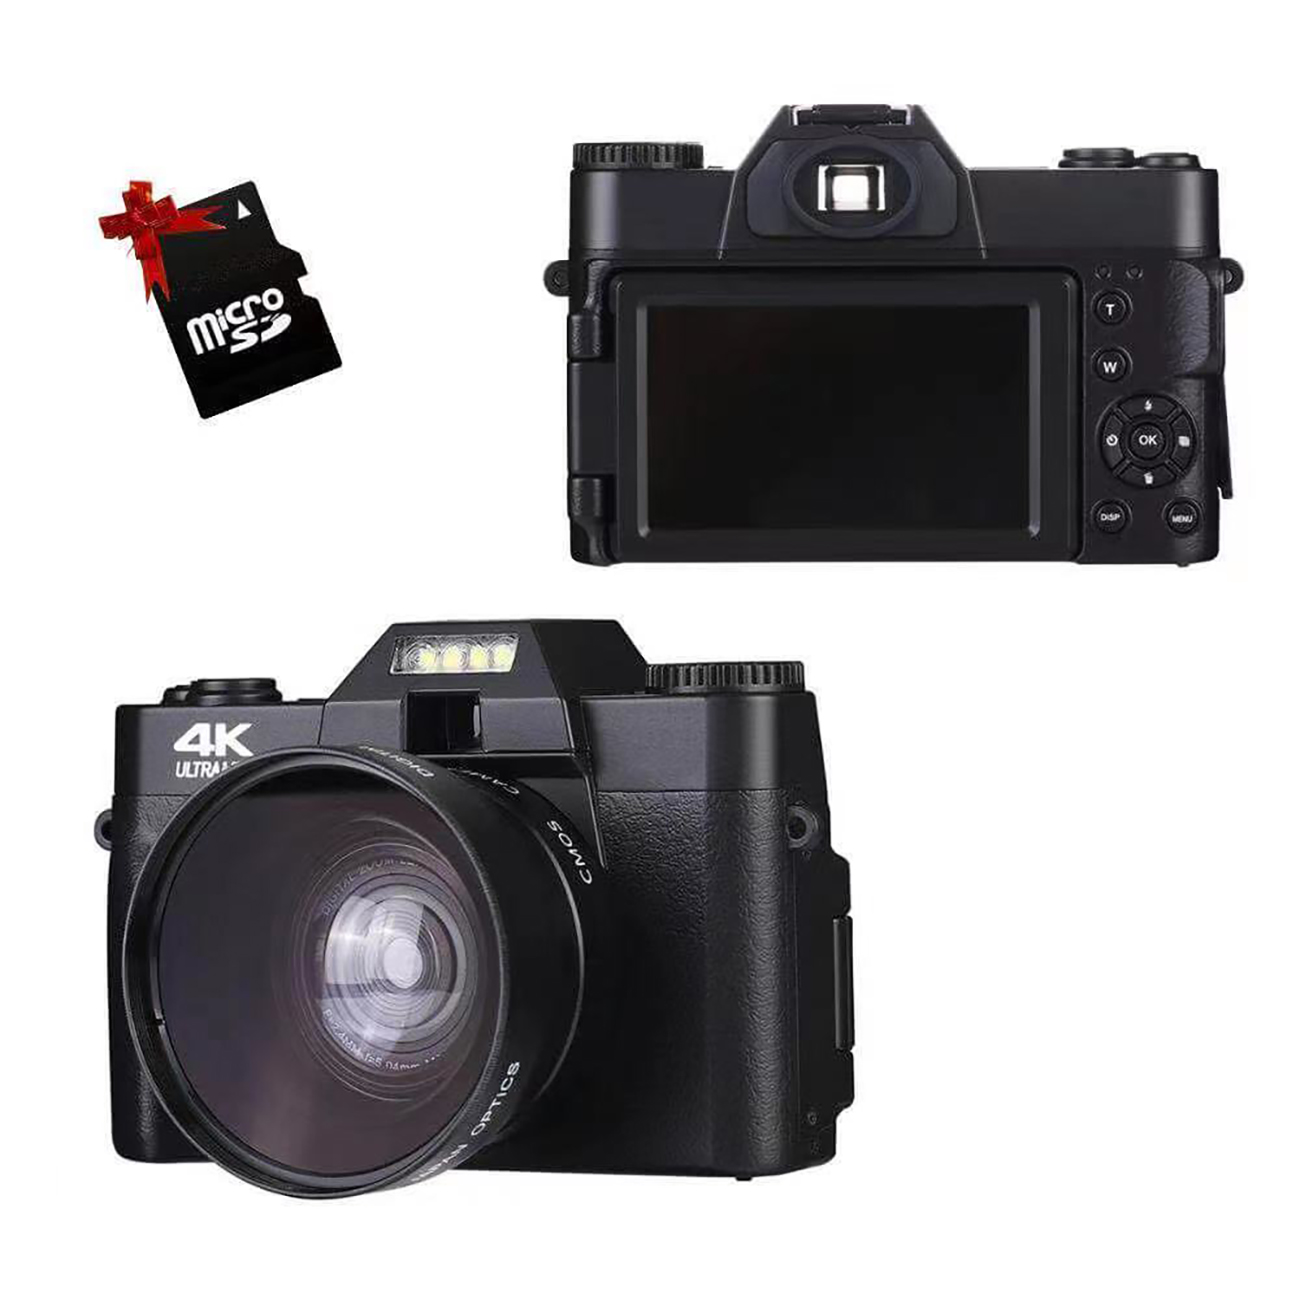 FINE LIFE PRO 4K Speicherkarte HD 30FPS Schwarz Kamera Digital 64G Digitalkamera